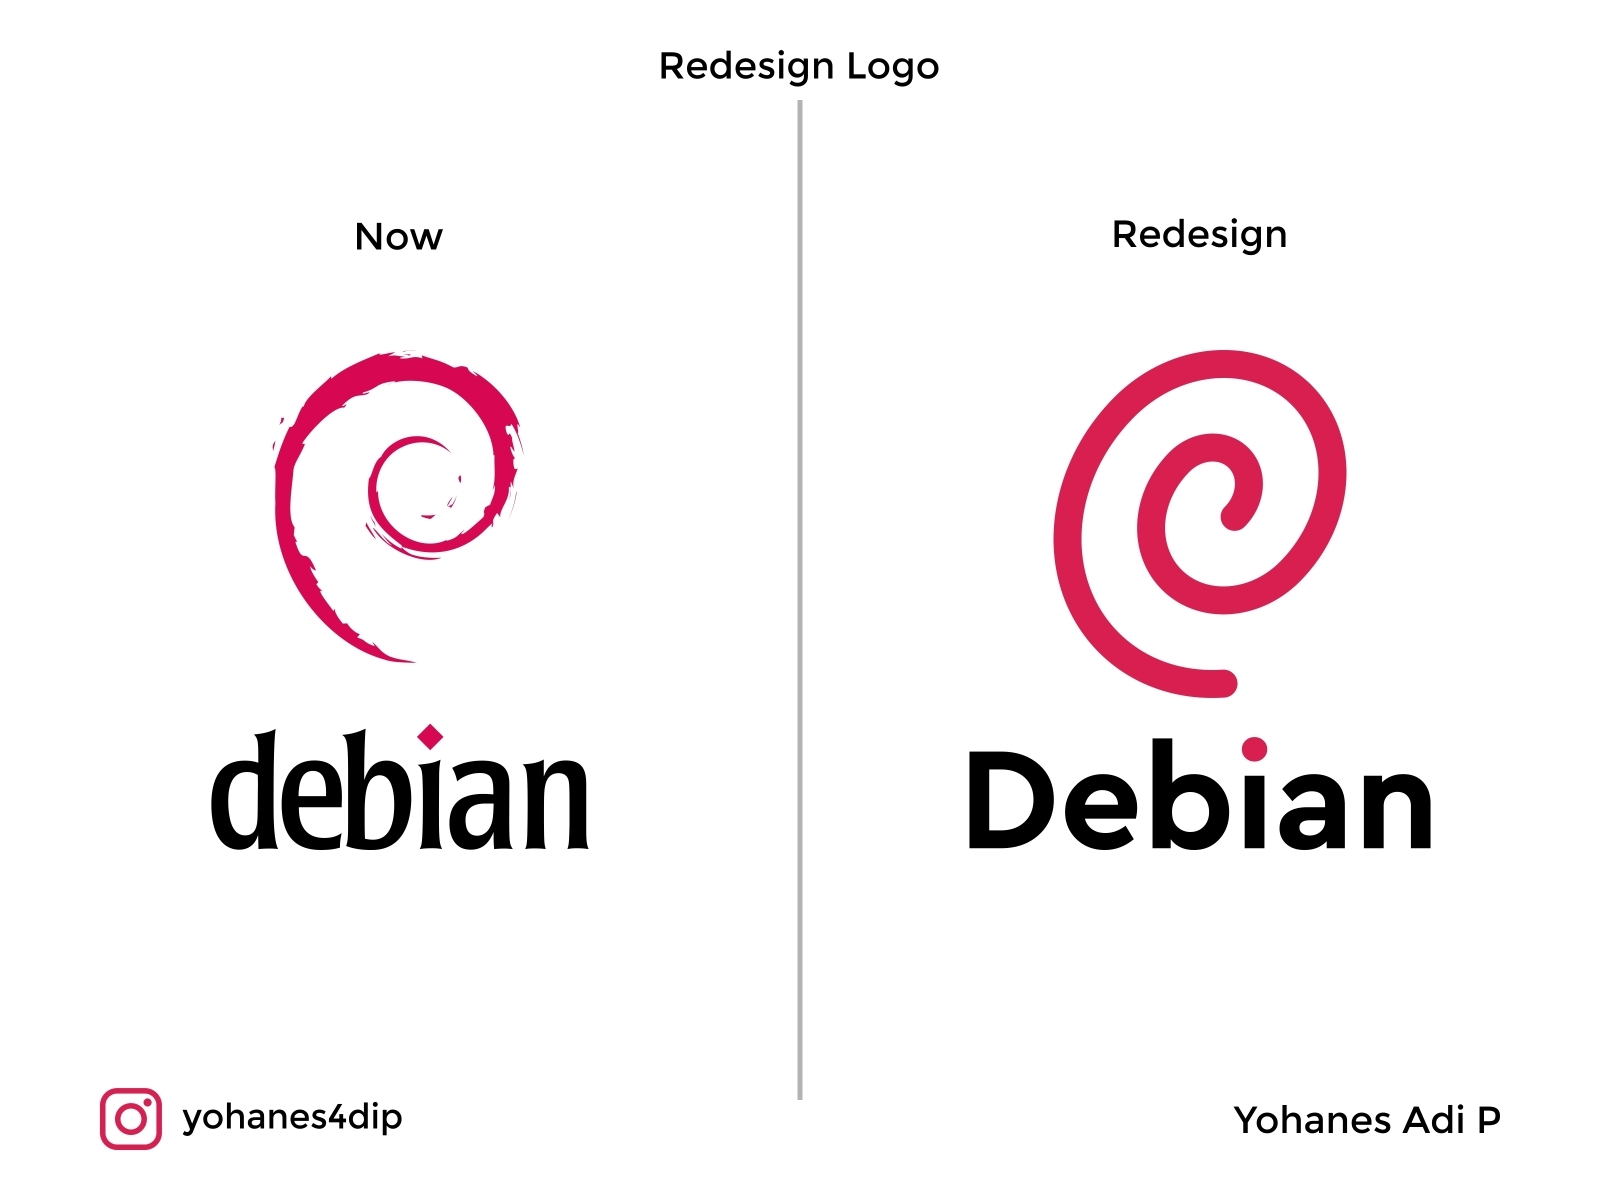 Redesign Debian Logo. by Yohanes Adi Prayogo on Dribbble